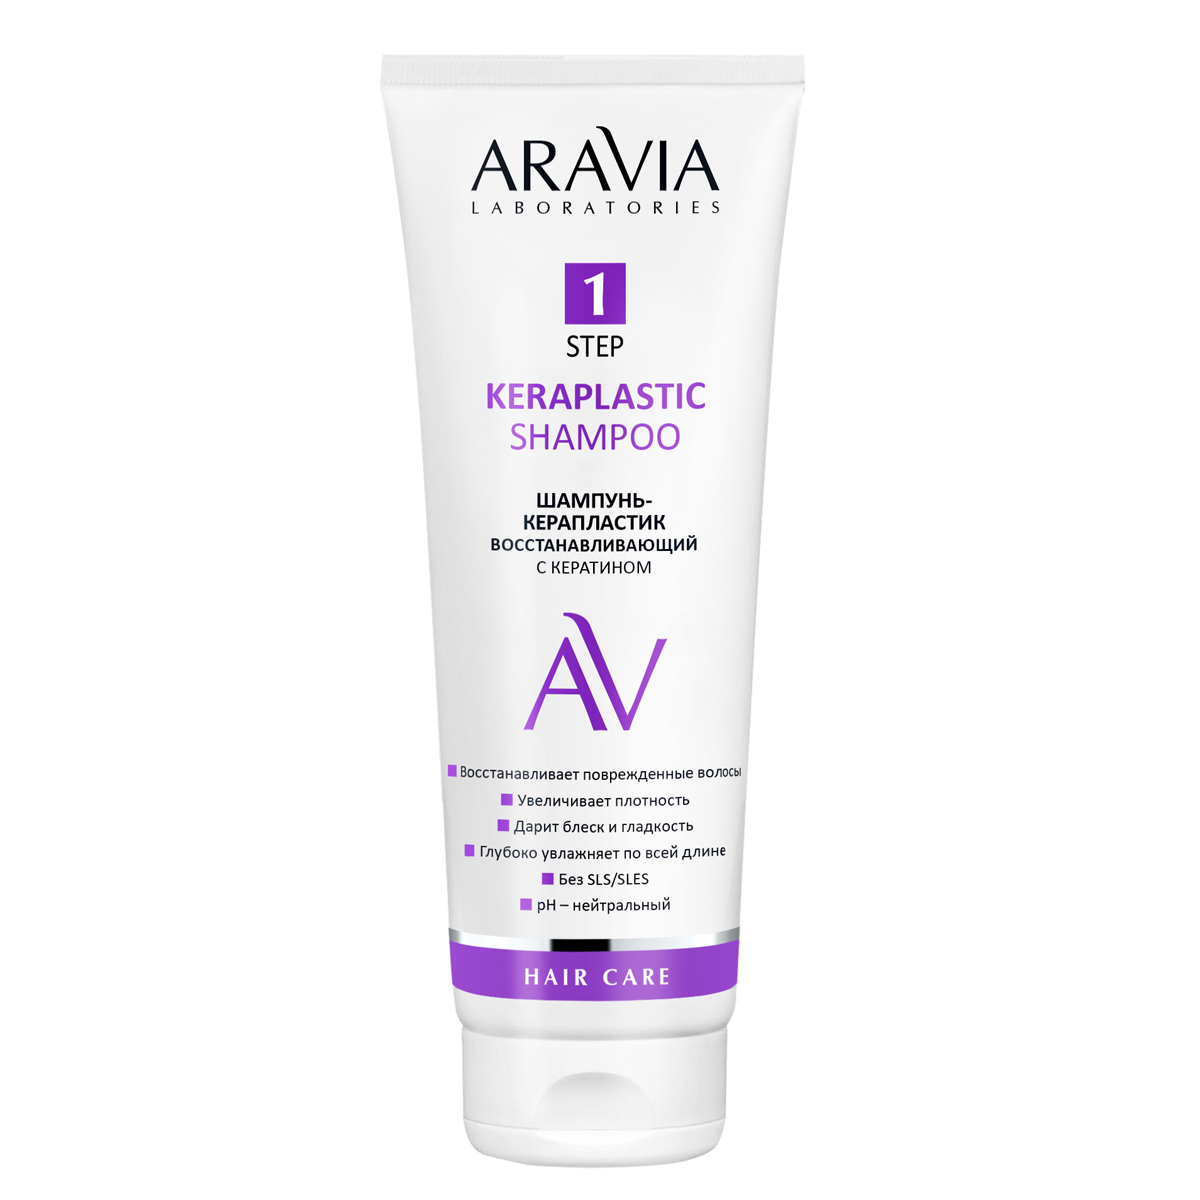 Aravia Laboratories Шампунь-керапластик восстанавливающий с кератином Keraplastic Shampoo, 250 мл (Aravia Laboratories, Уход за волосами)